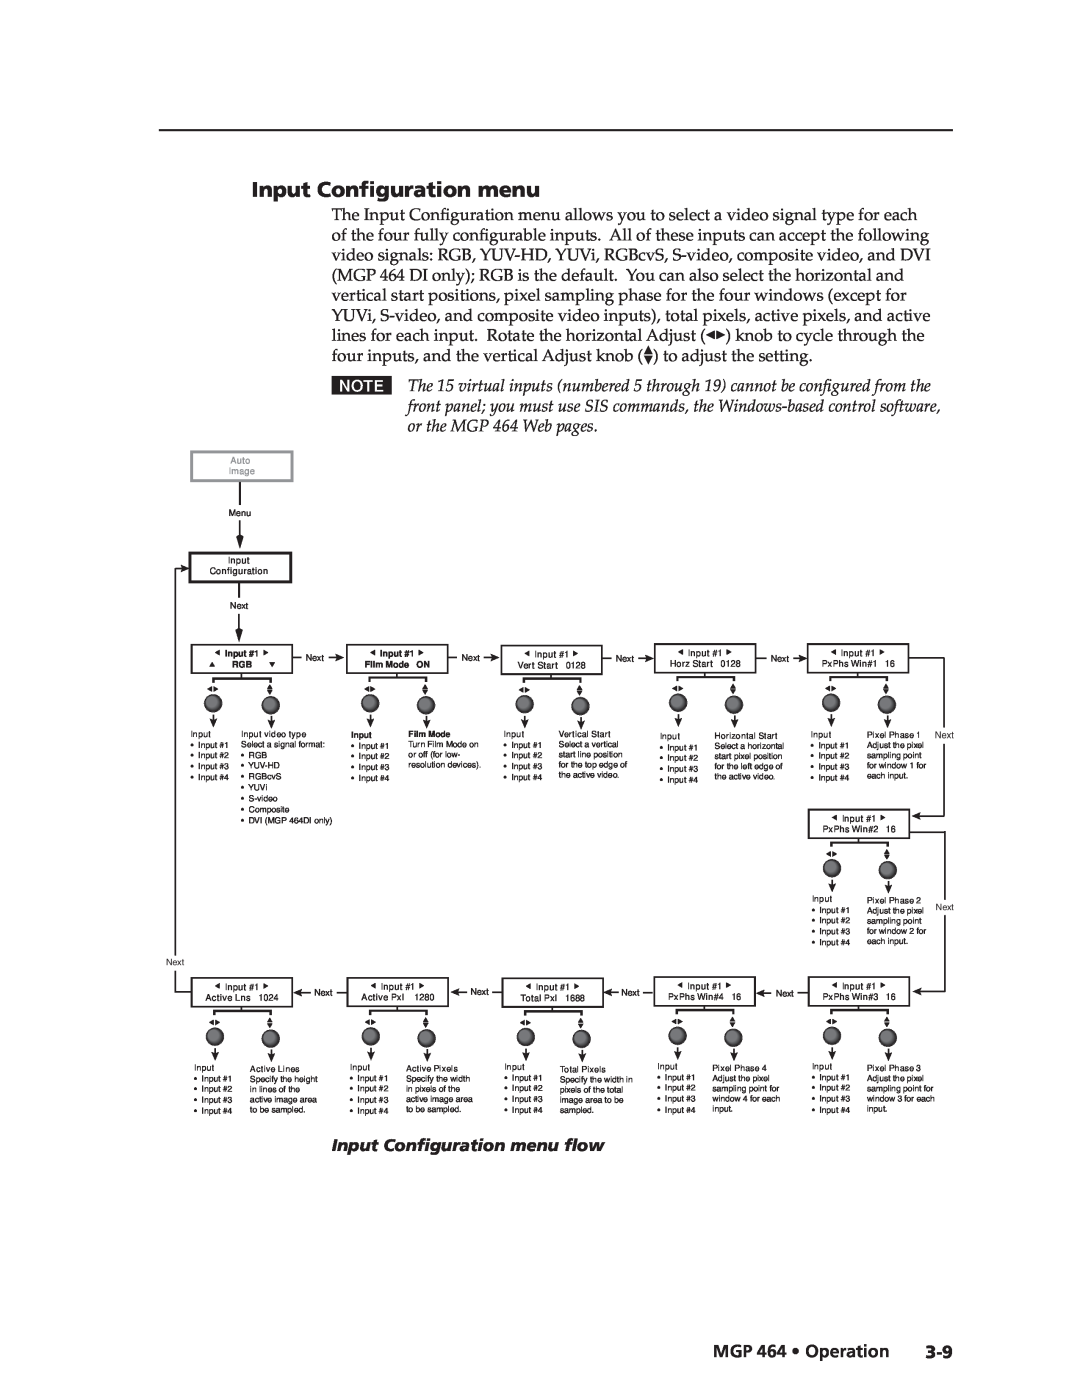 Extron electronic MGP 464 DI manual Preliminary, Input Configuration menu flow, MGP 464 Operation, Auto Image 